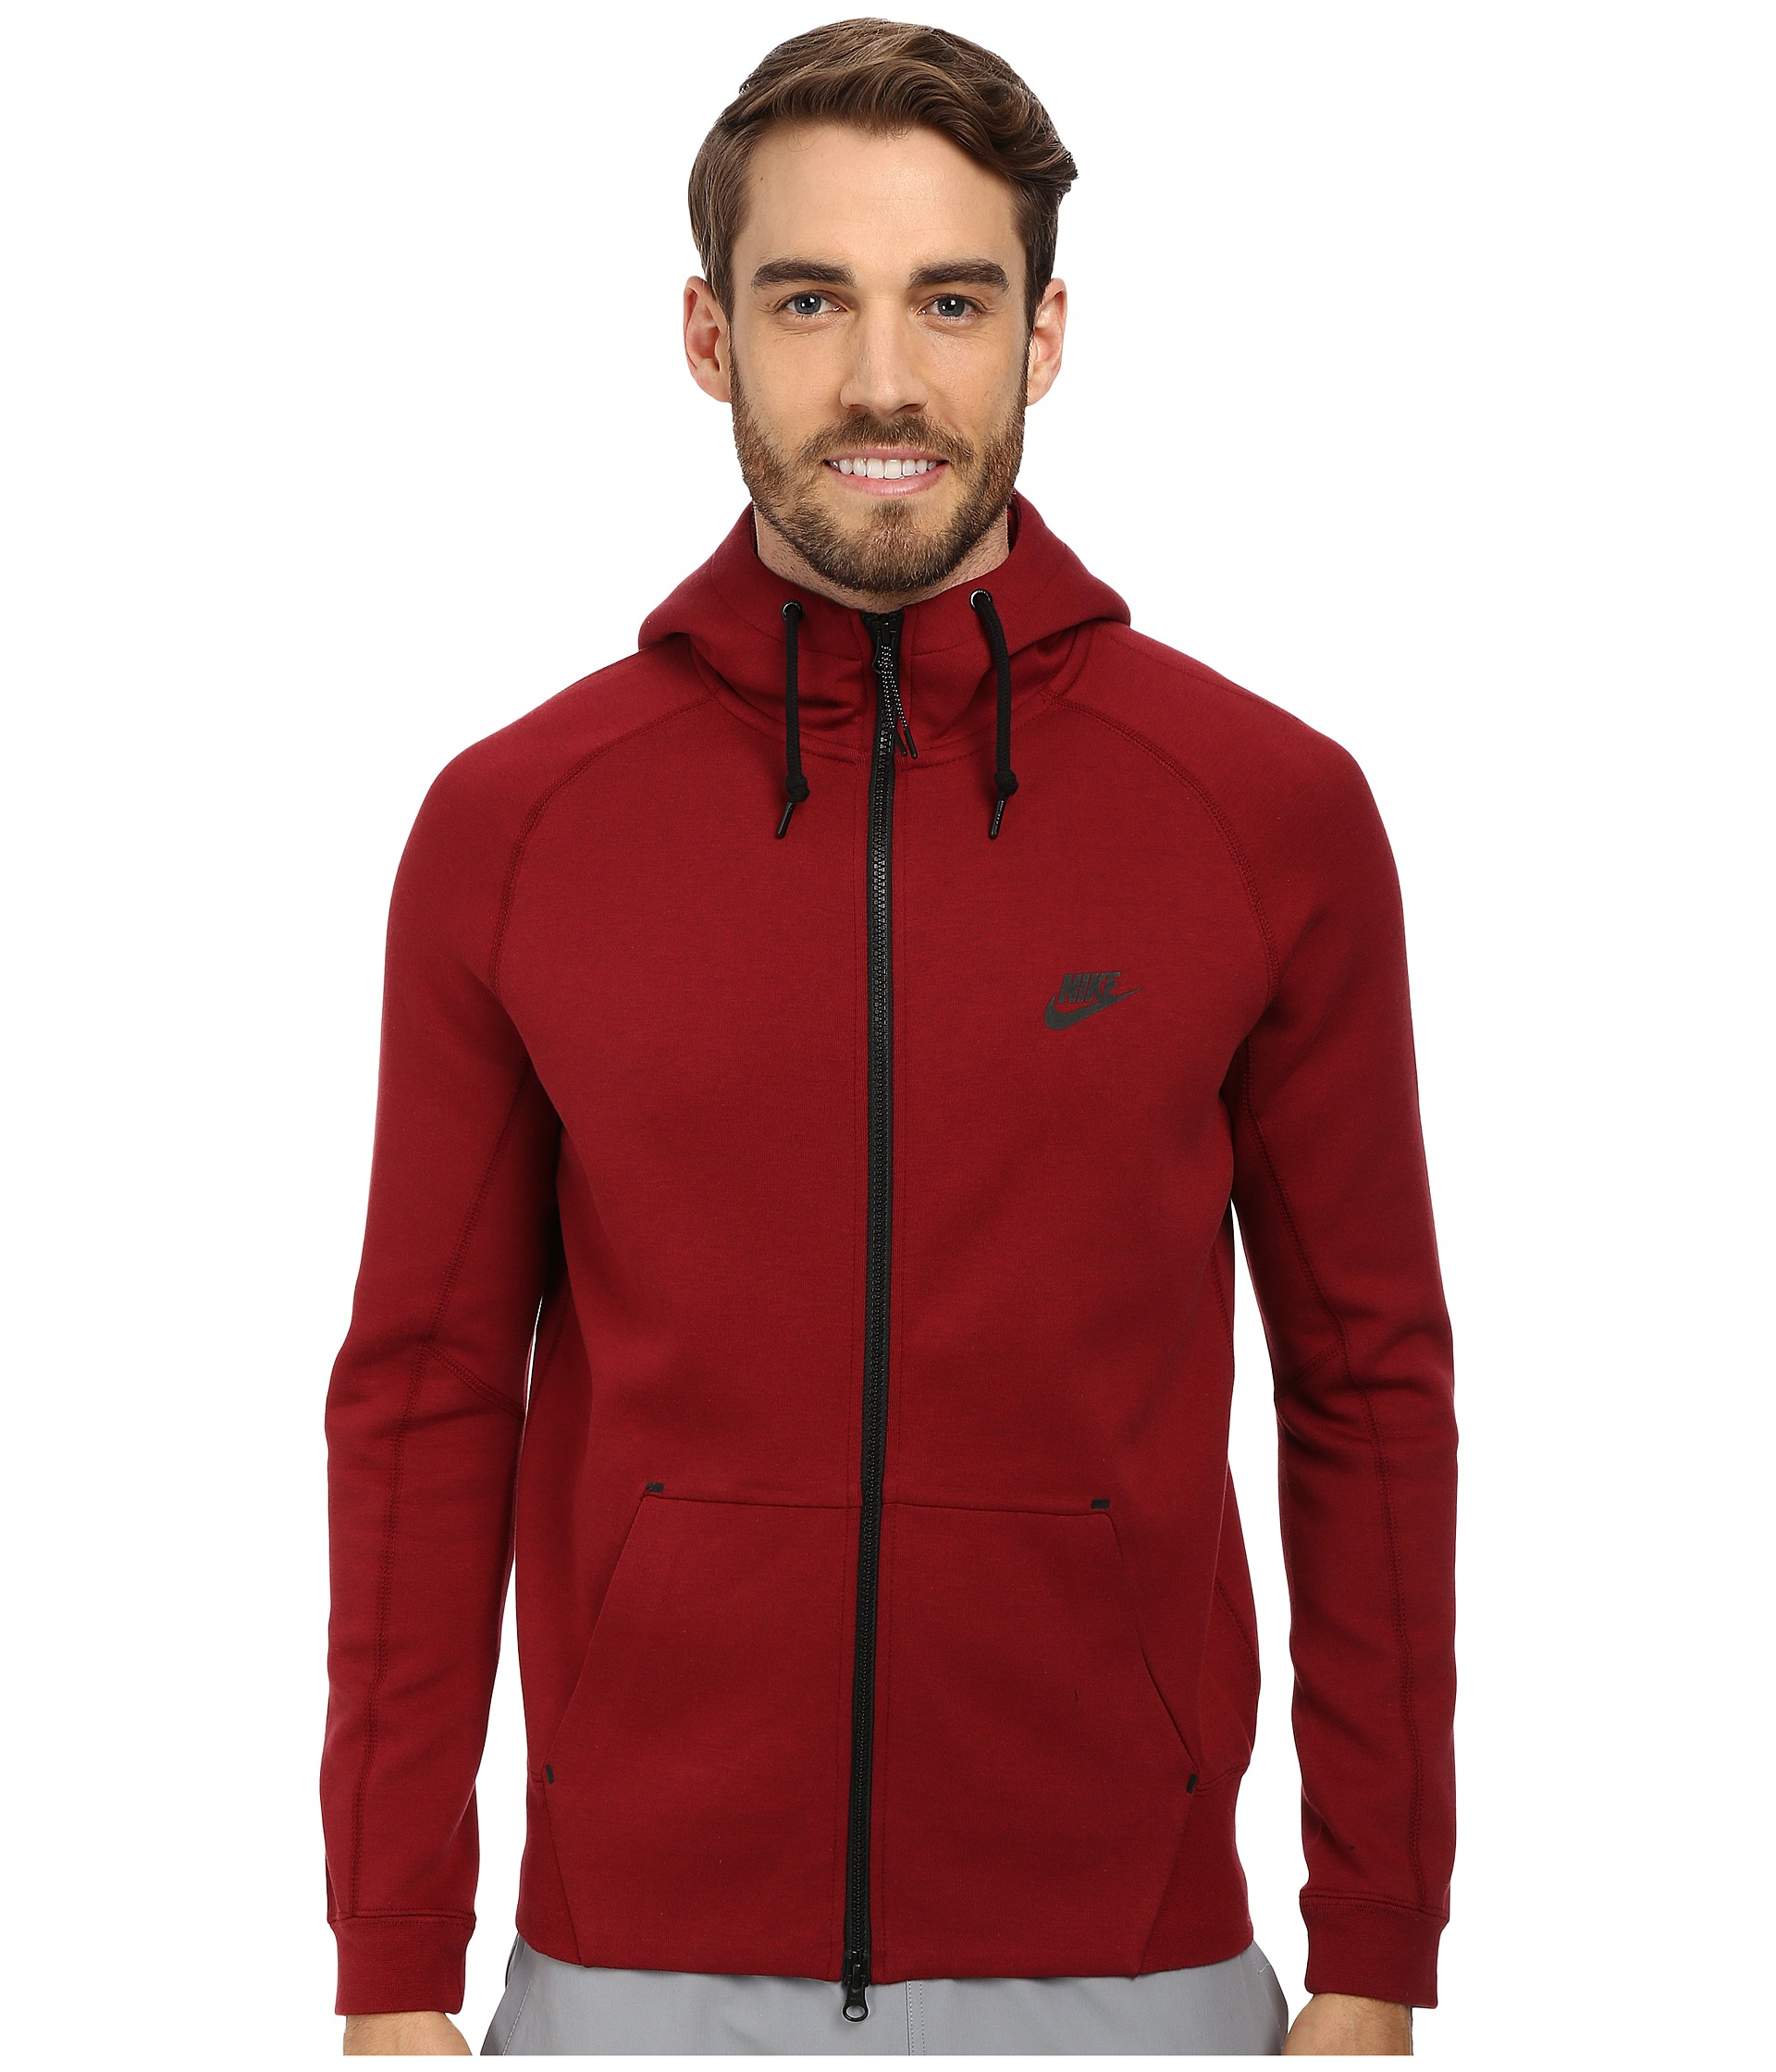 Lyst - Nike Hooded Zip Up Cotton Blend Sweatshirt in Red for Men